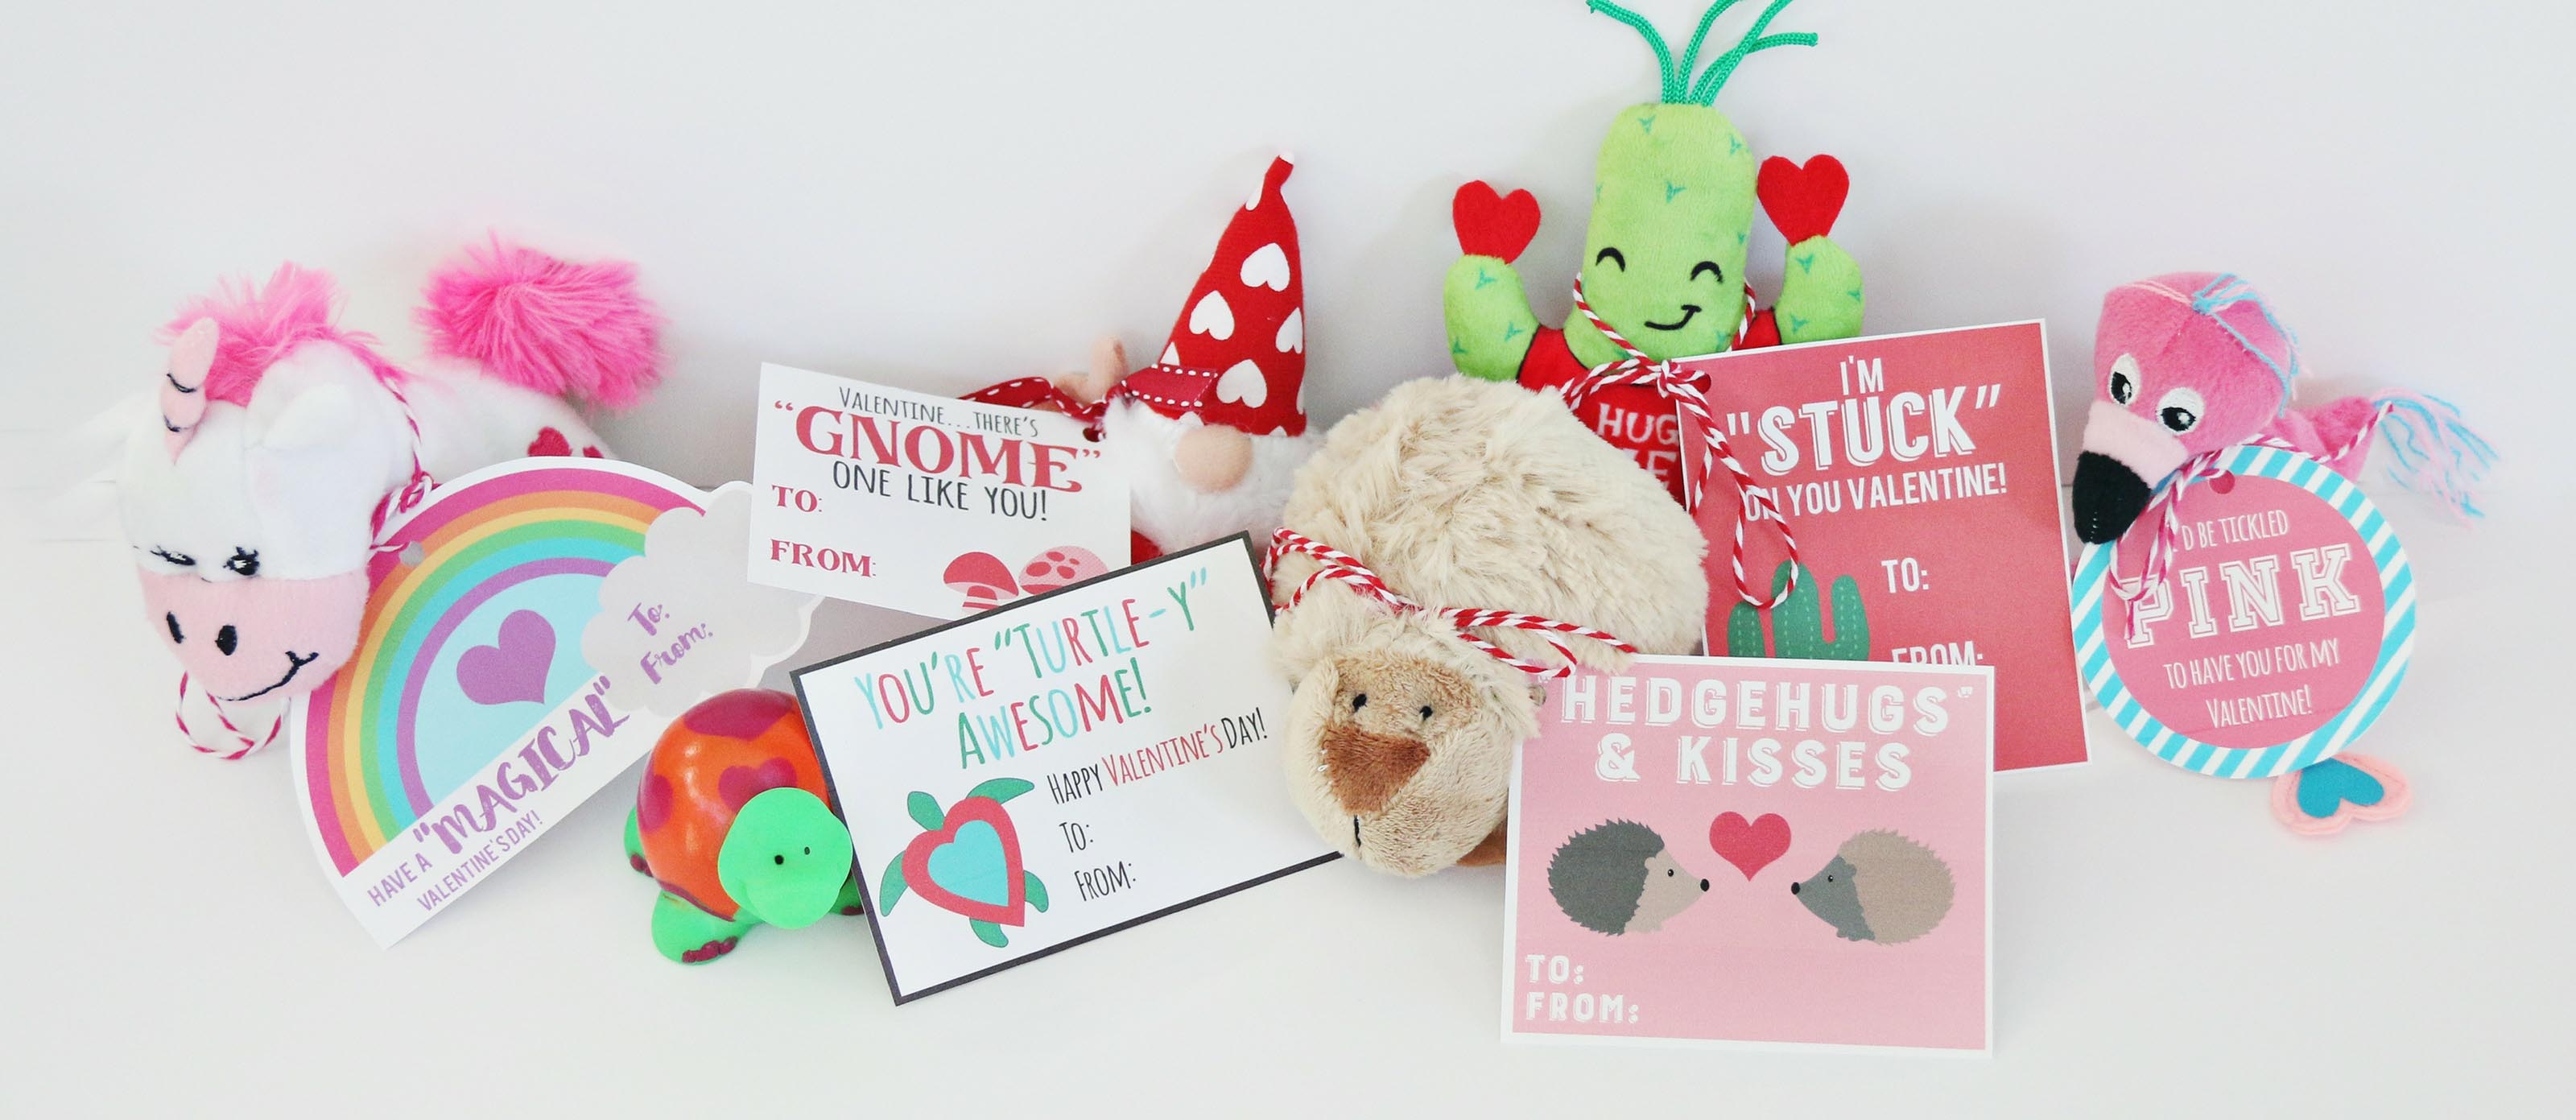 20 Free Valentine Printable Cards | Fun365 - Free Printable Football Valentines Day Cards